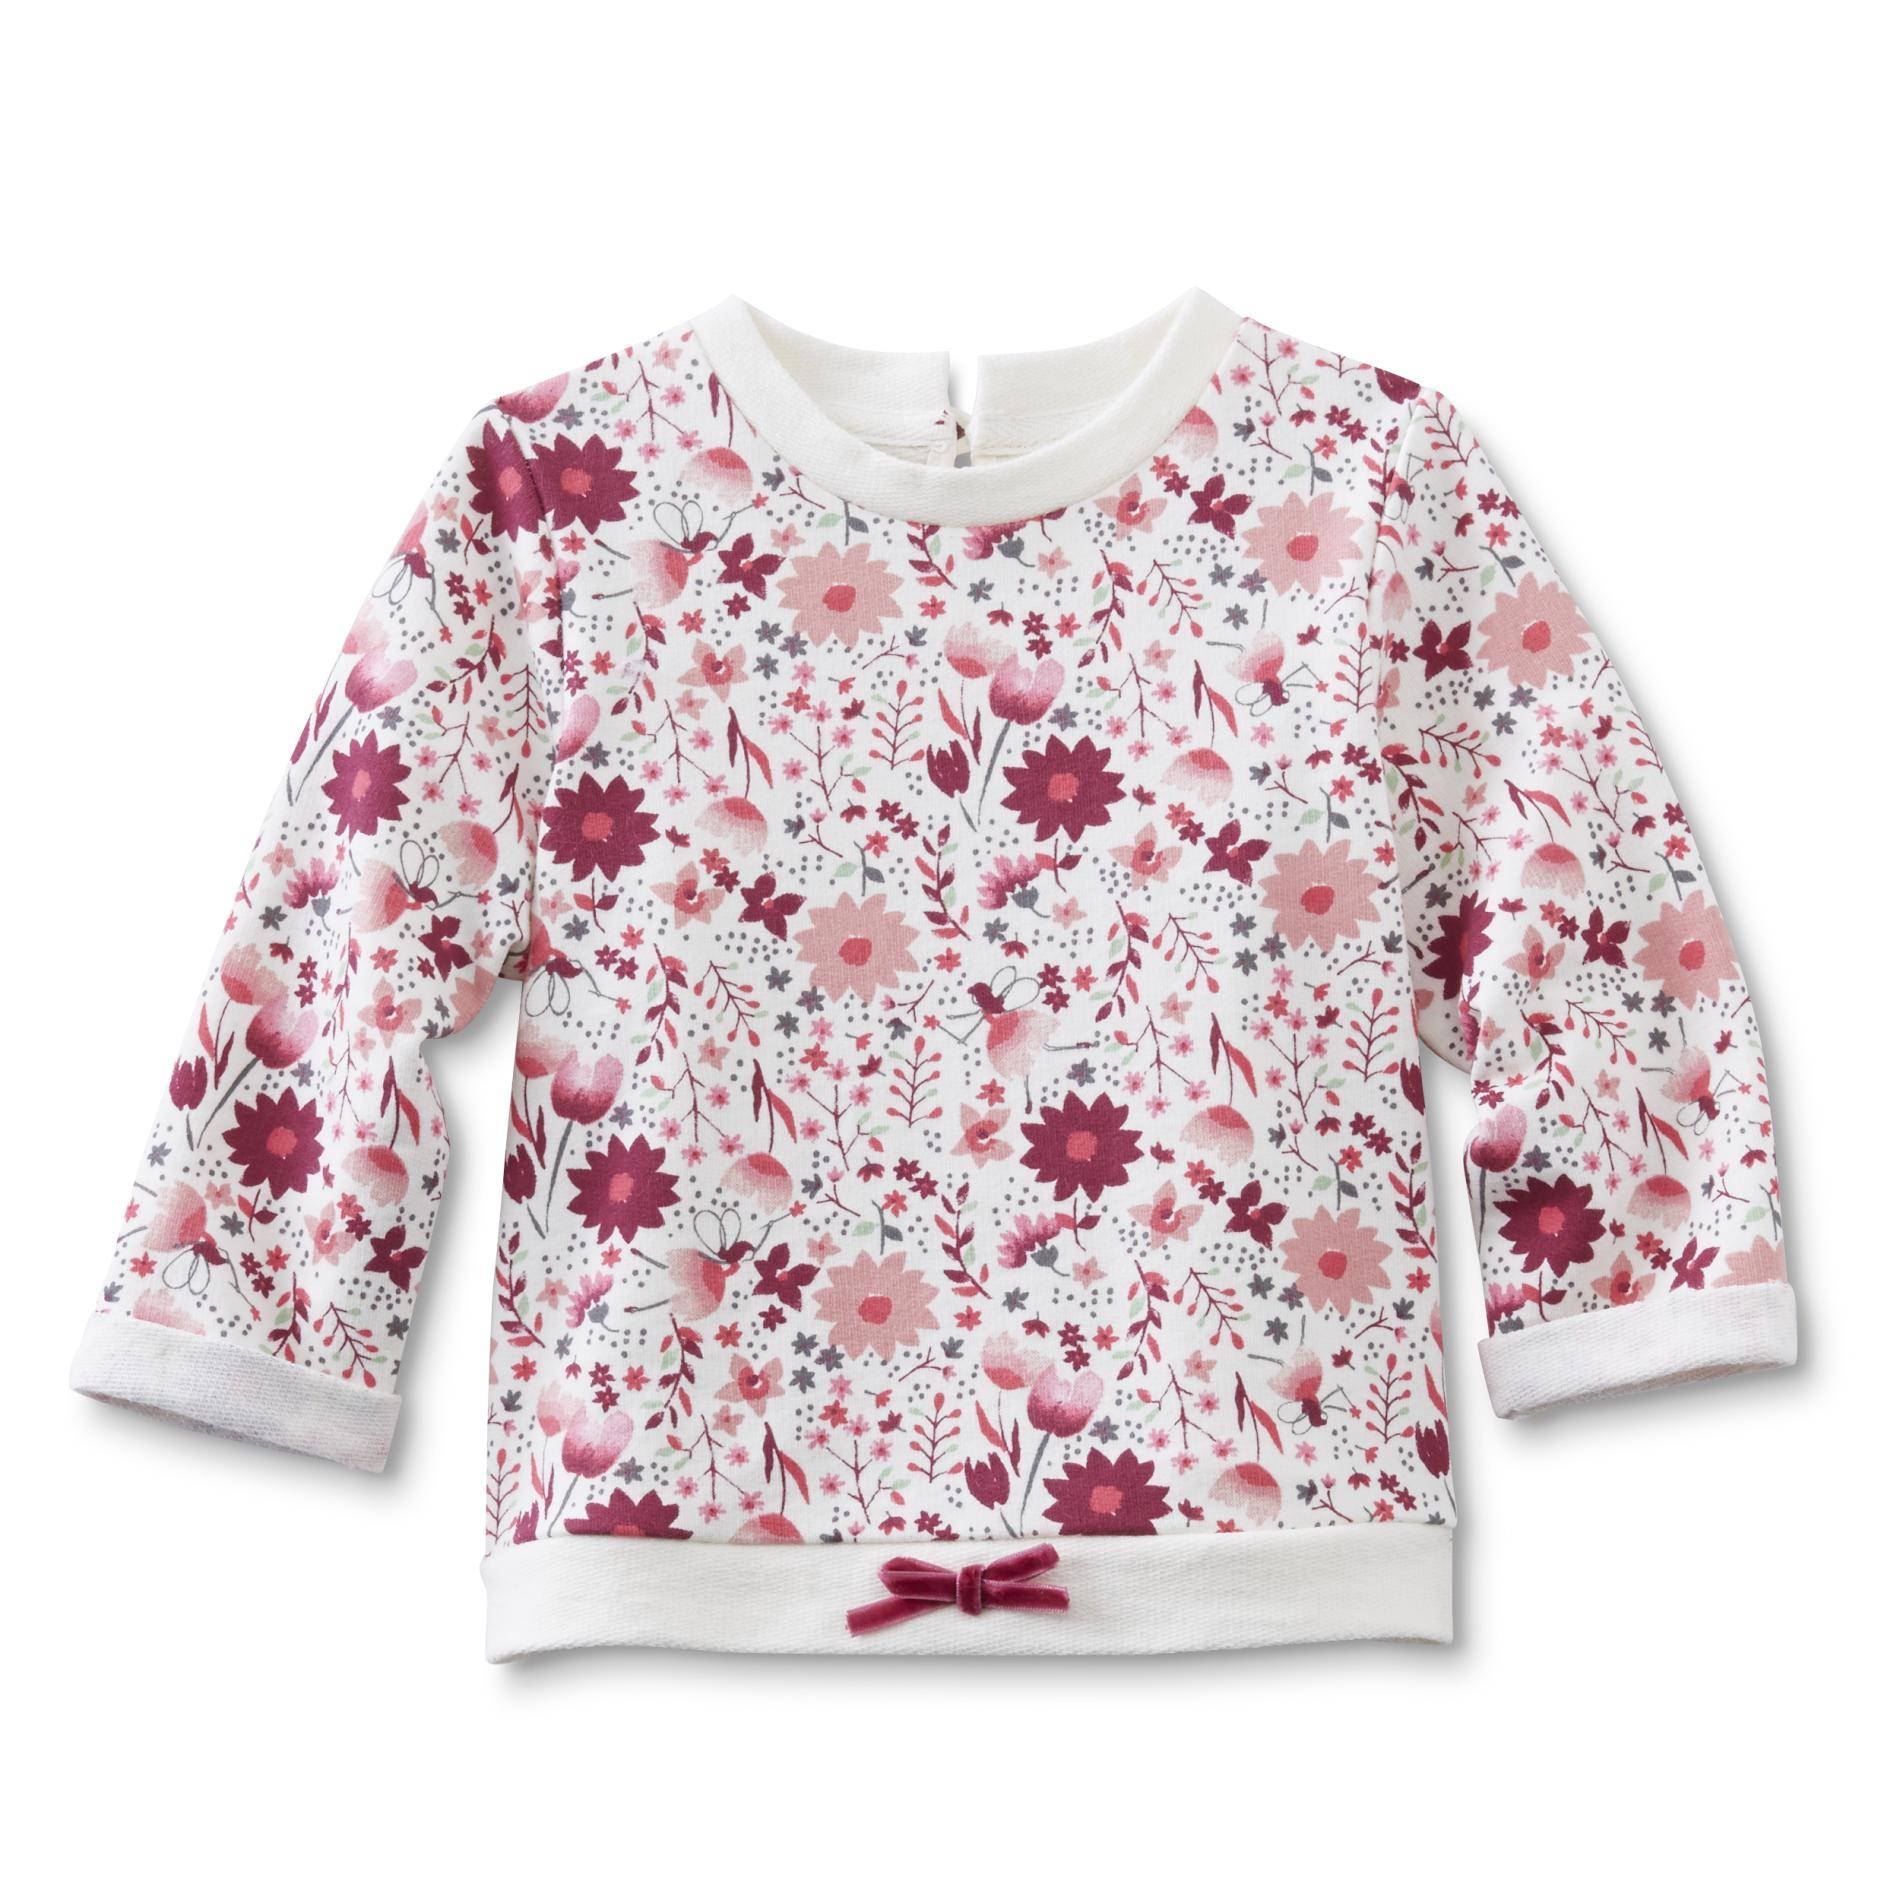 Little Wonders Newborn & Infant Girl's Sweatshirt - Floral